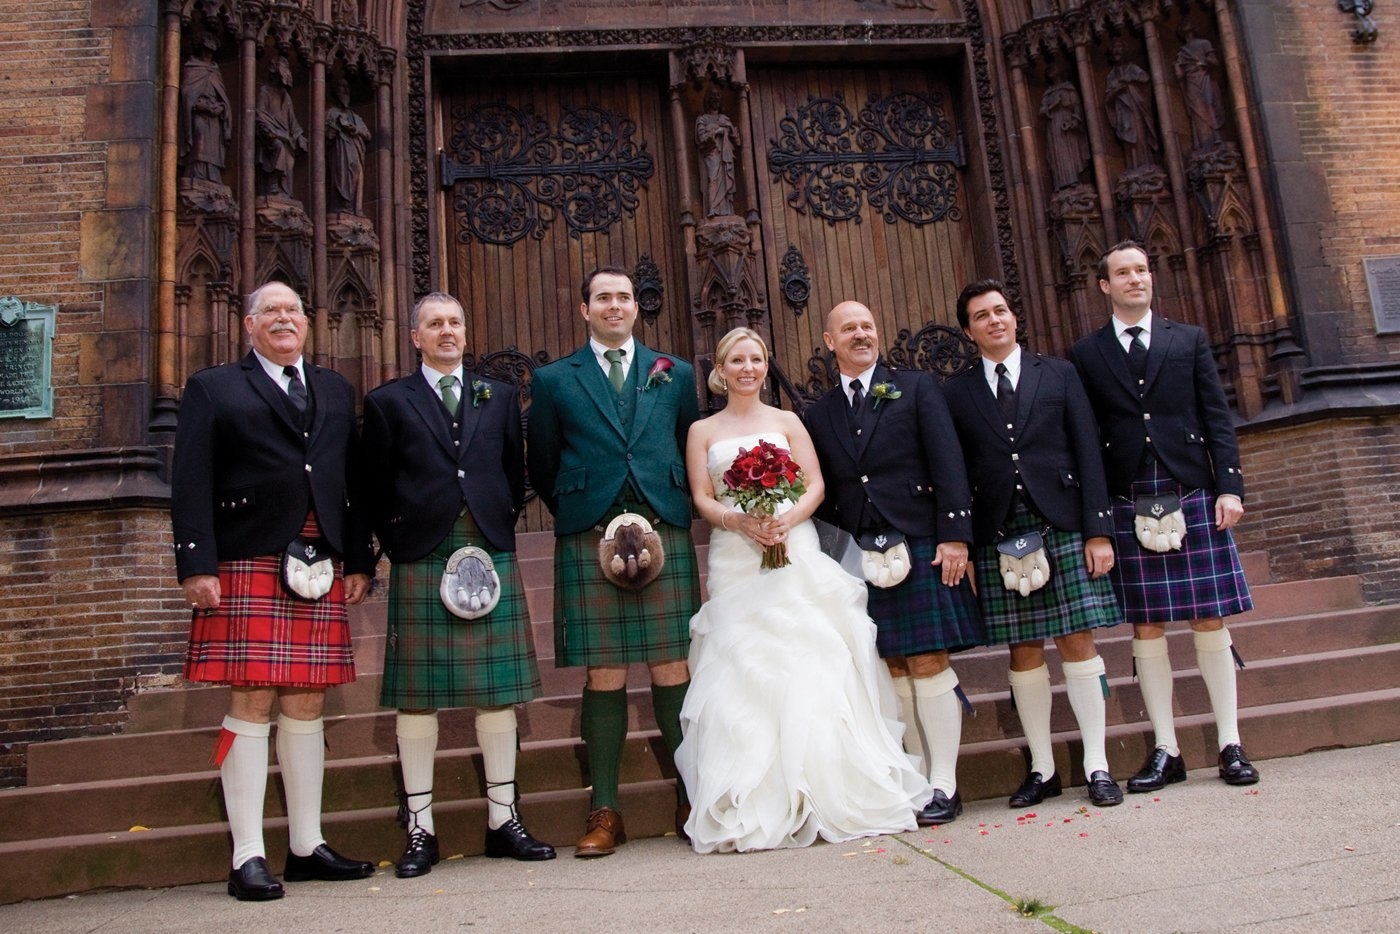 What old irish traditions. Свадьба в Шотландии. Свадебная церемония в Шотландии. Свадьба в Шотландии традиции. Свадебные традиции в Шотландии.